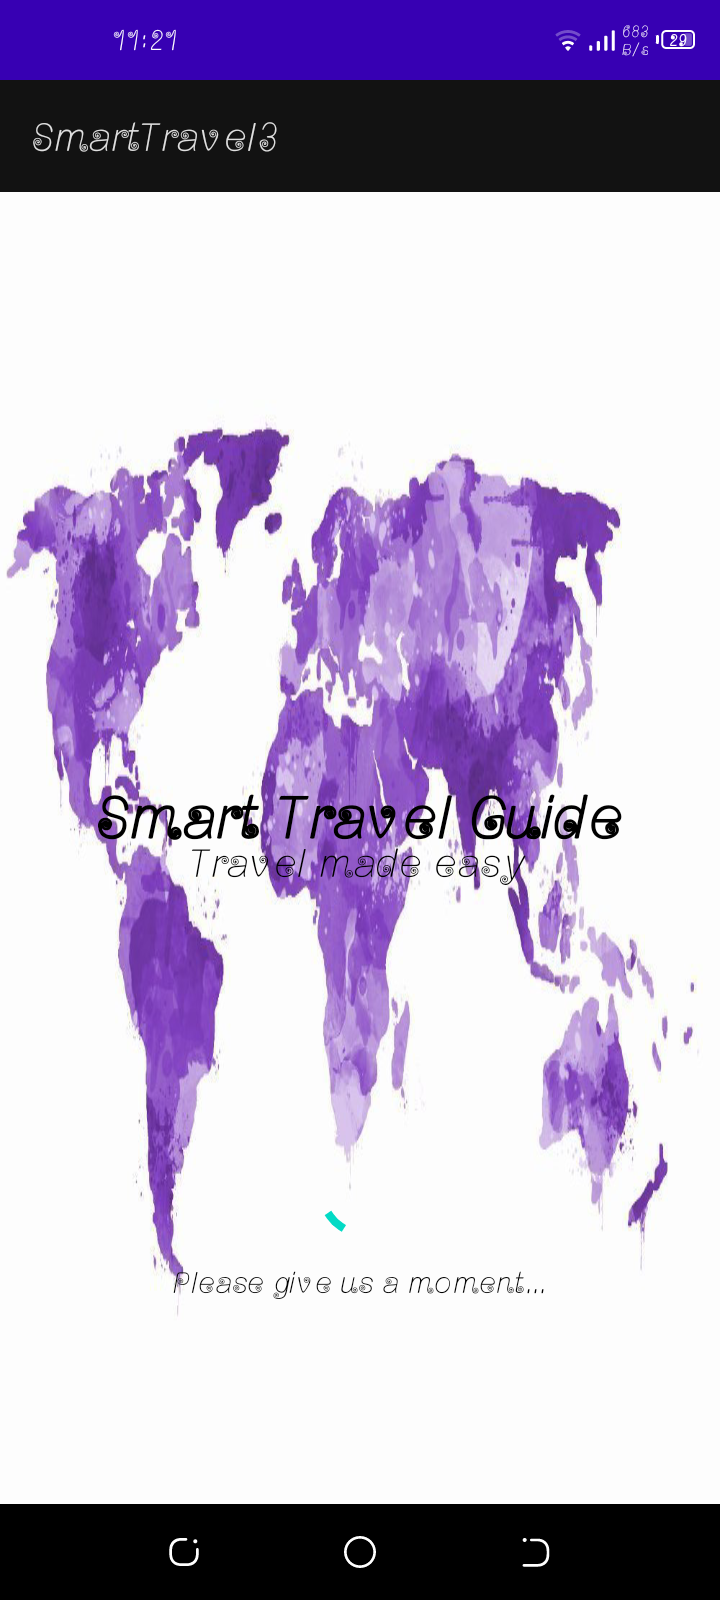 Smart Travel Guide